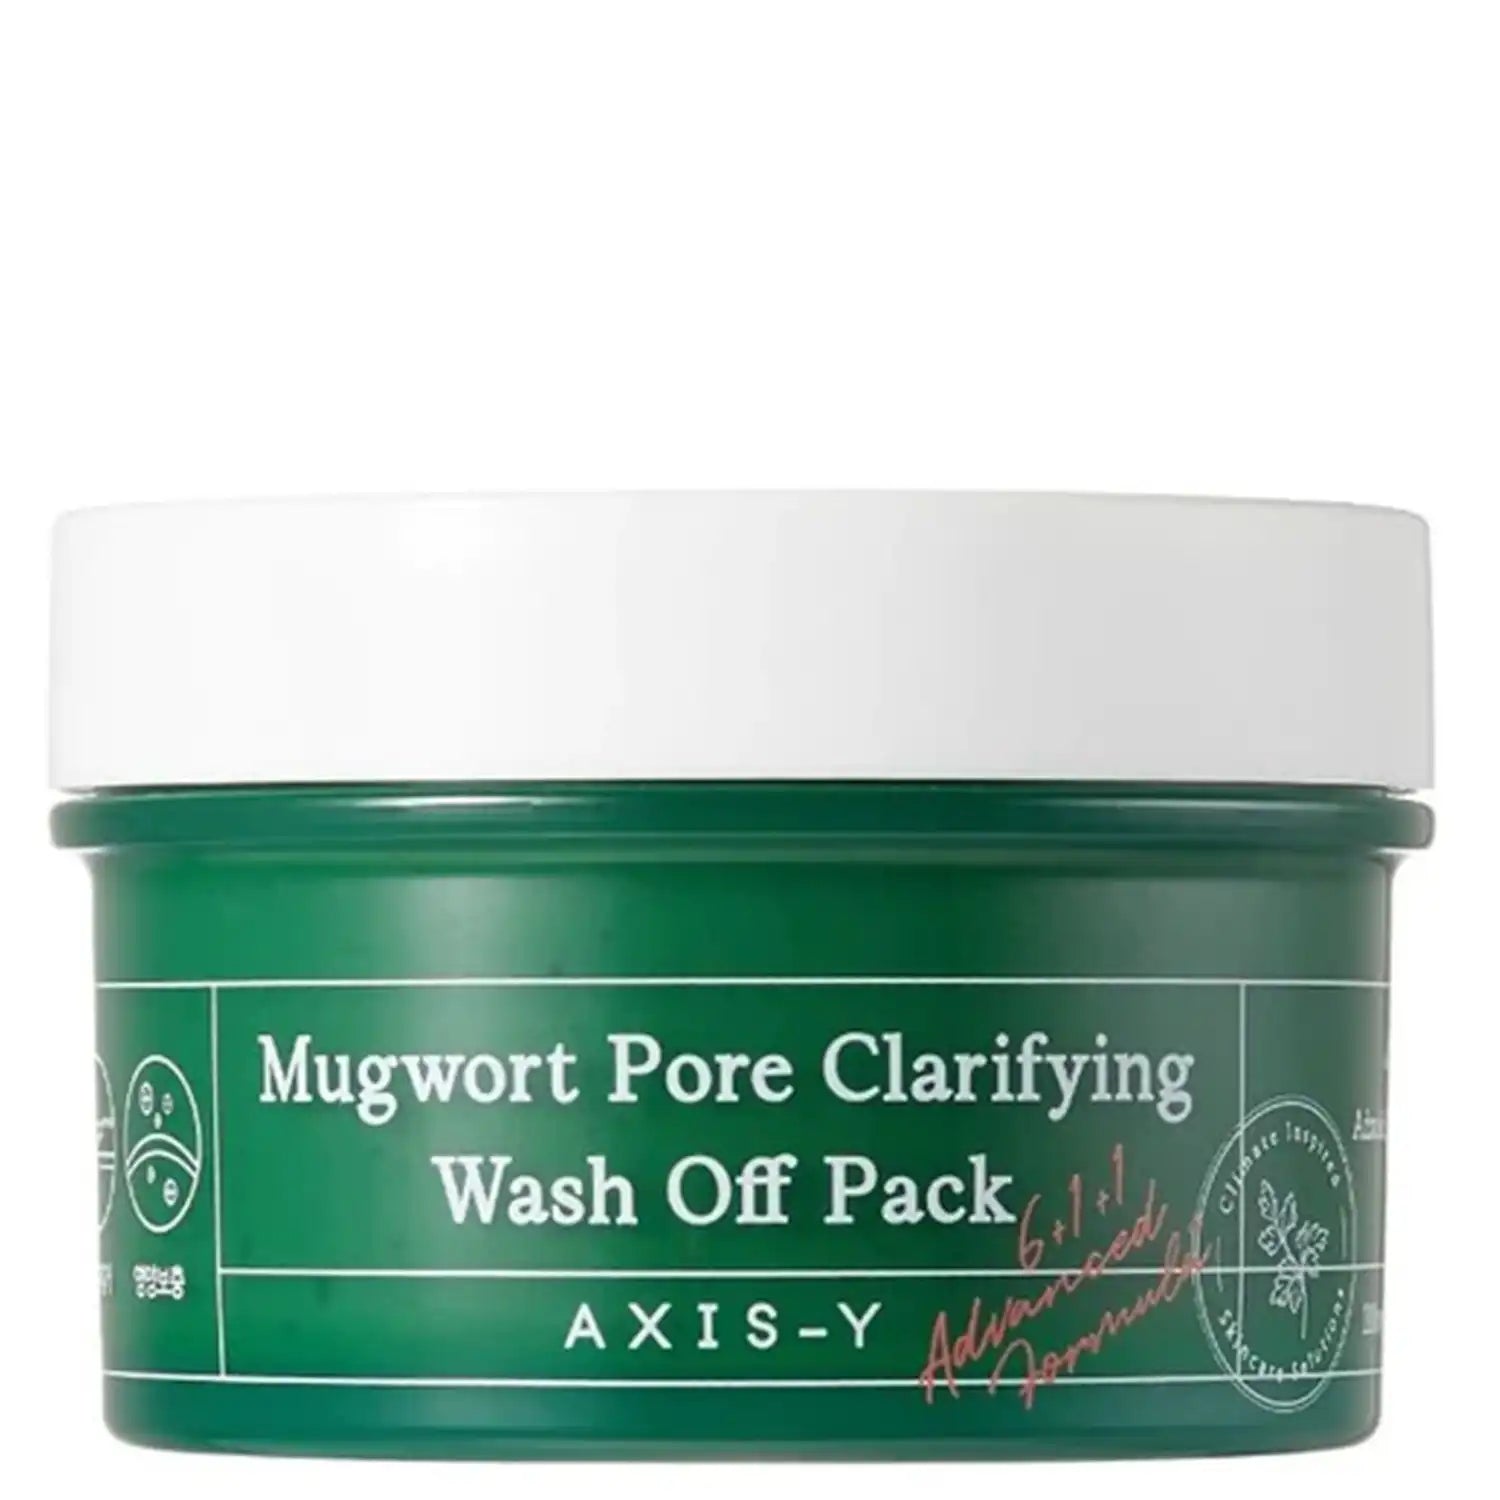 Axis-y Mugwort Pore Clarifiying Wash Off Pack